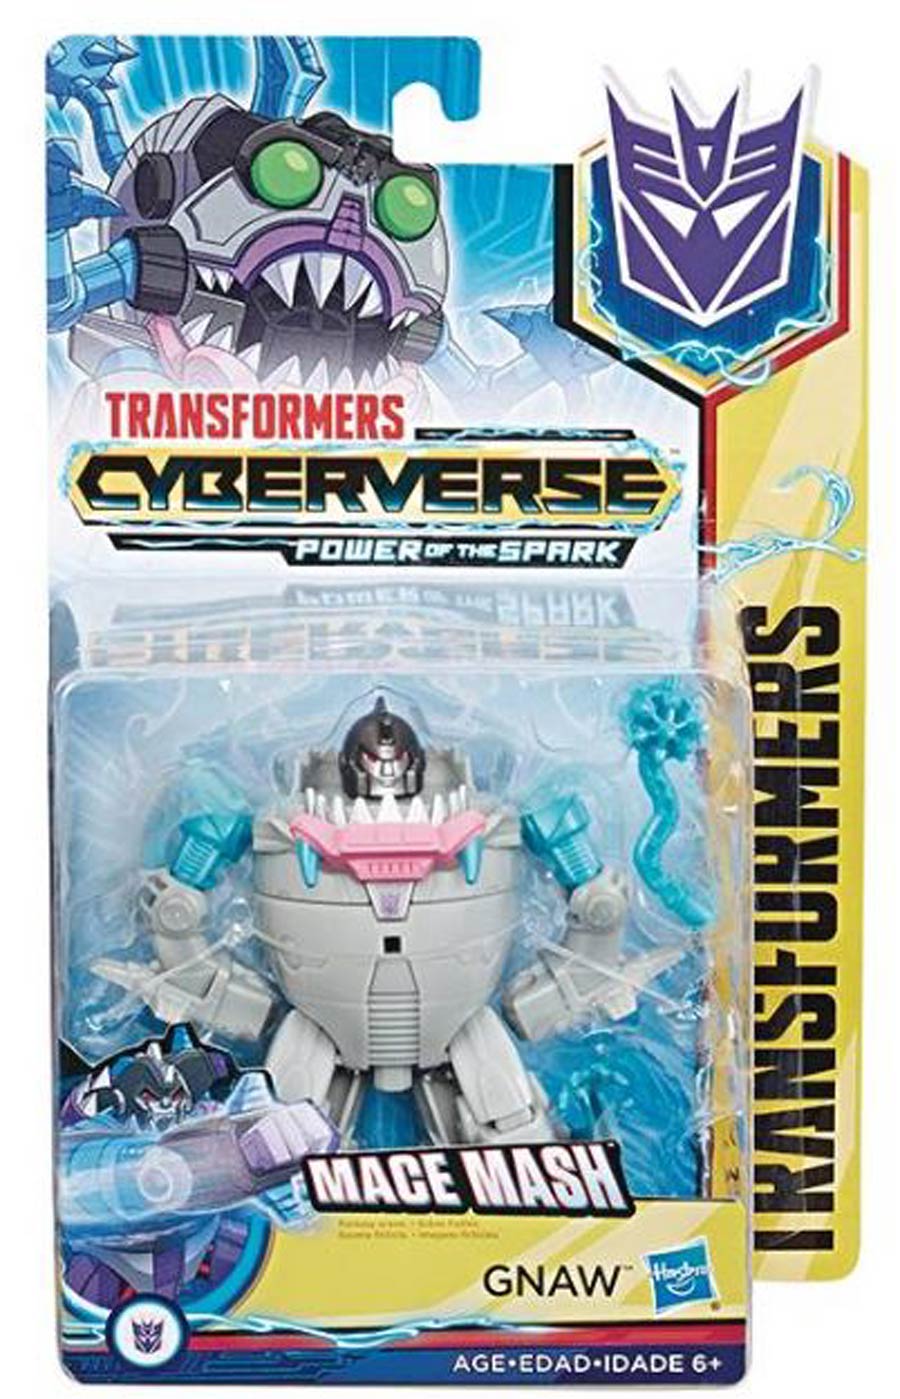 Transformers Cyberverse Warrior Action Figure Assortment 201902 - Gnaw